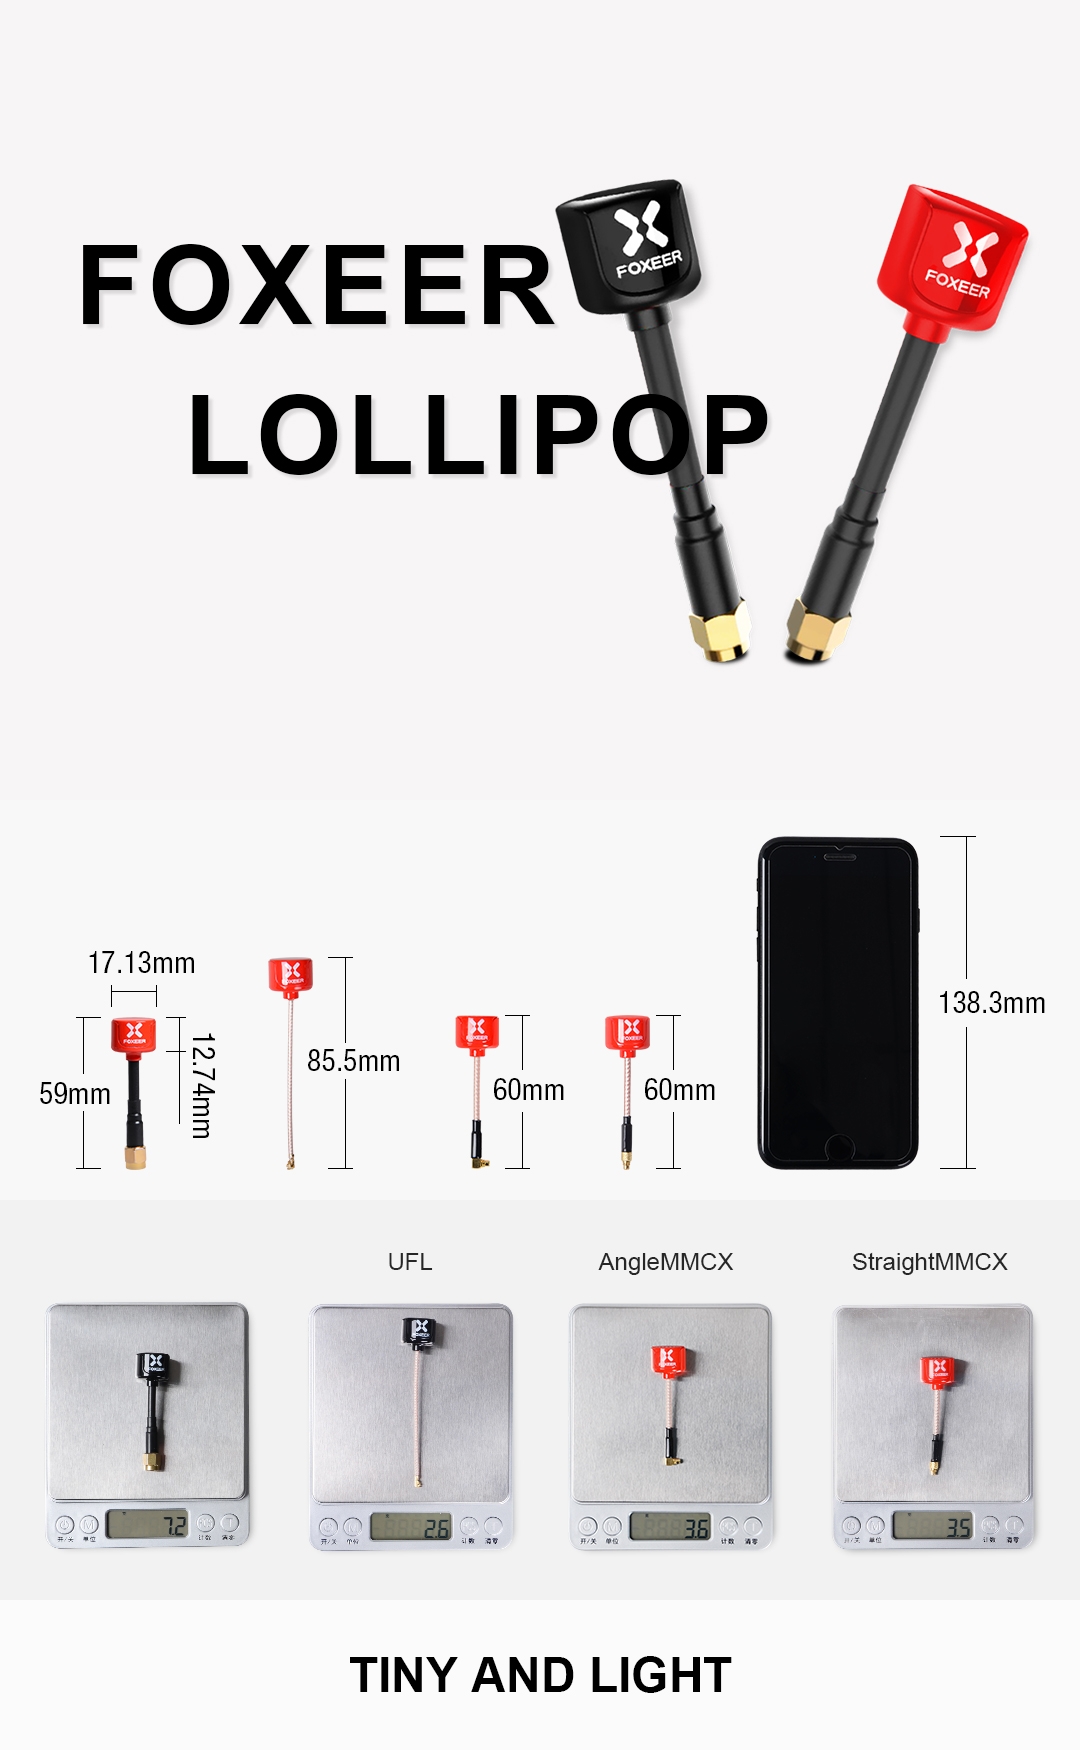 2pcs Foxeer Lollipop 85.5mm 5.8G 2.3dBi LHCP UFL Super Mini FPV Antenna Red/Black For RC Drone